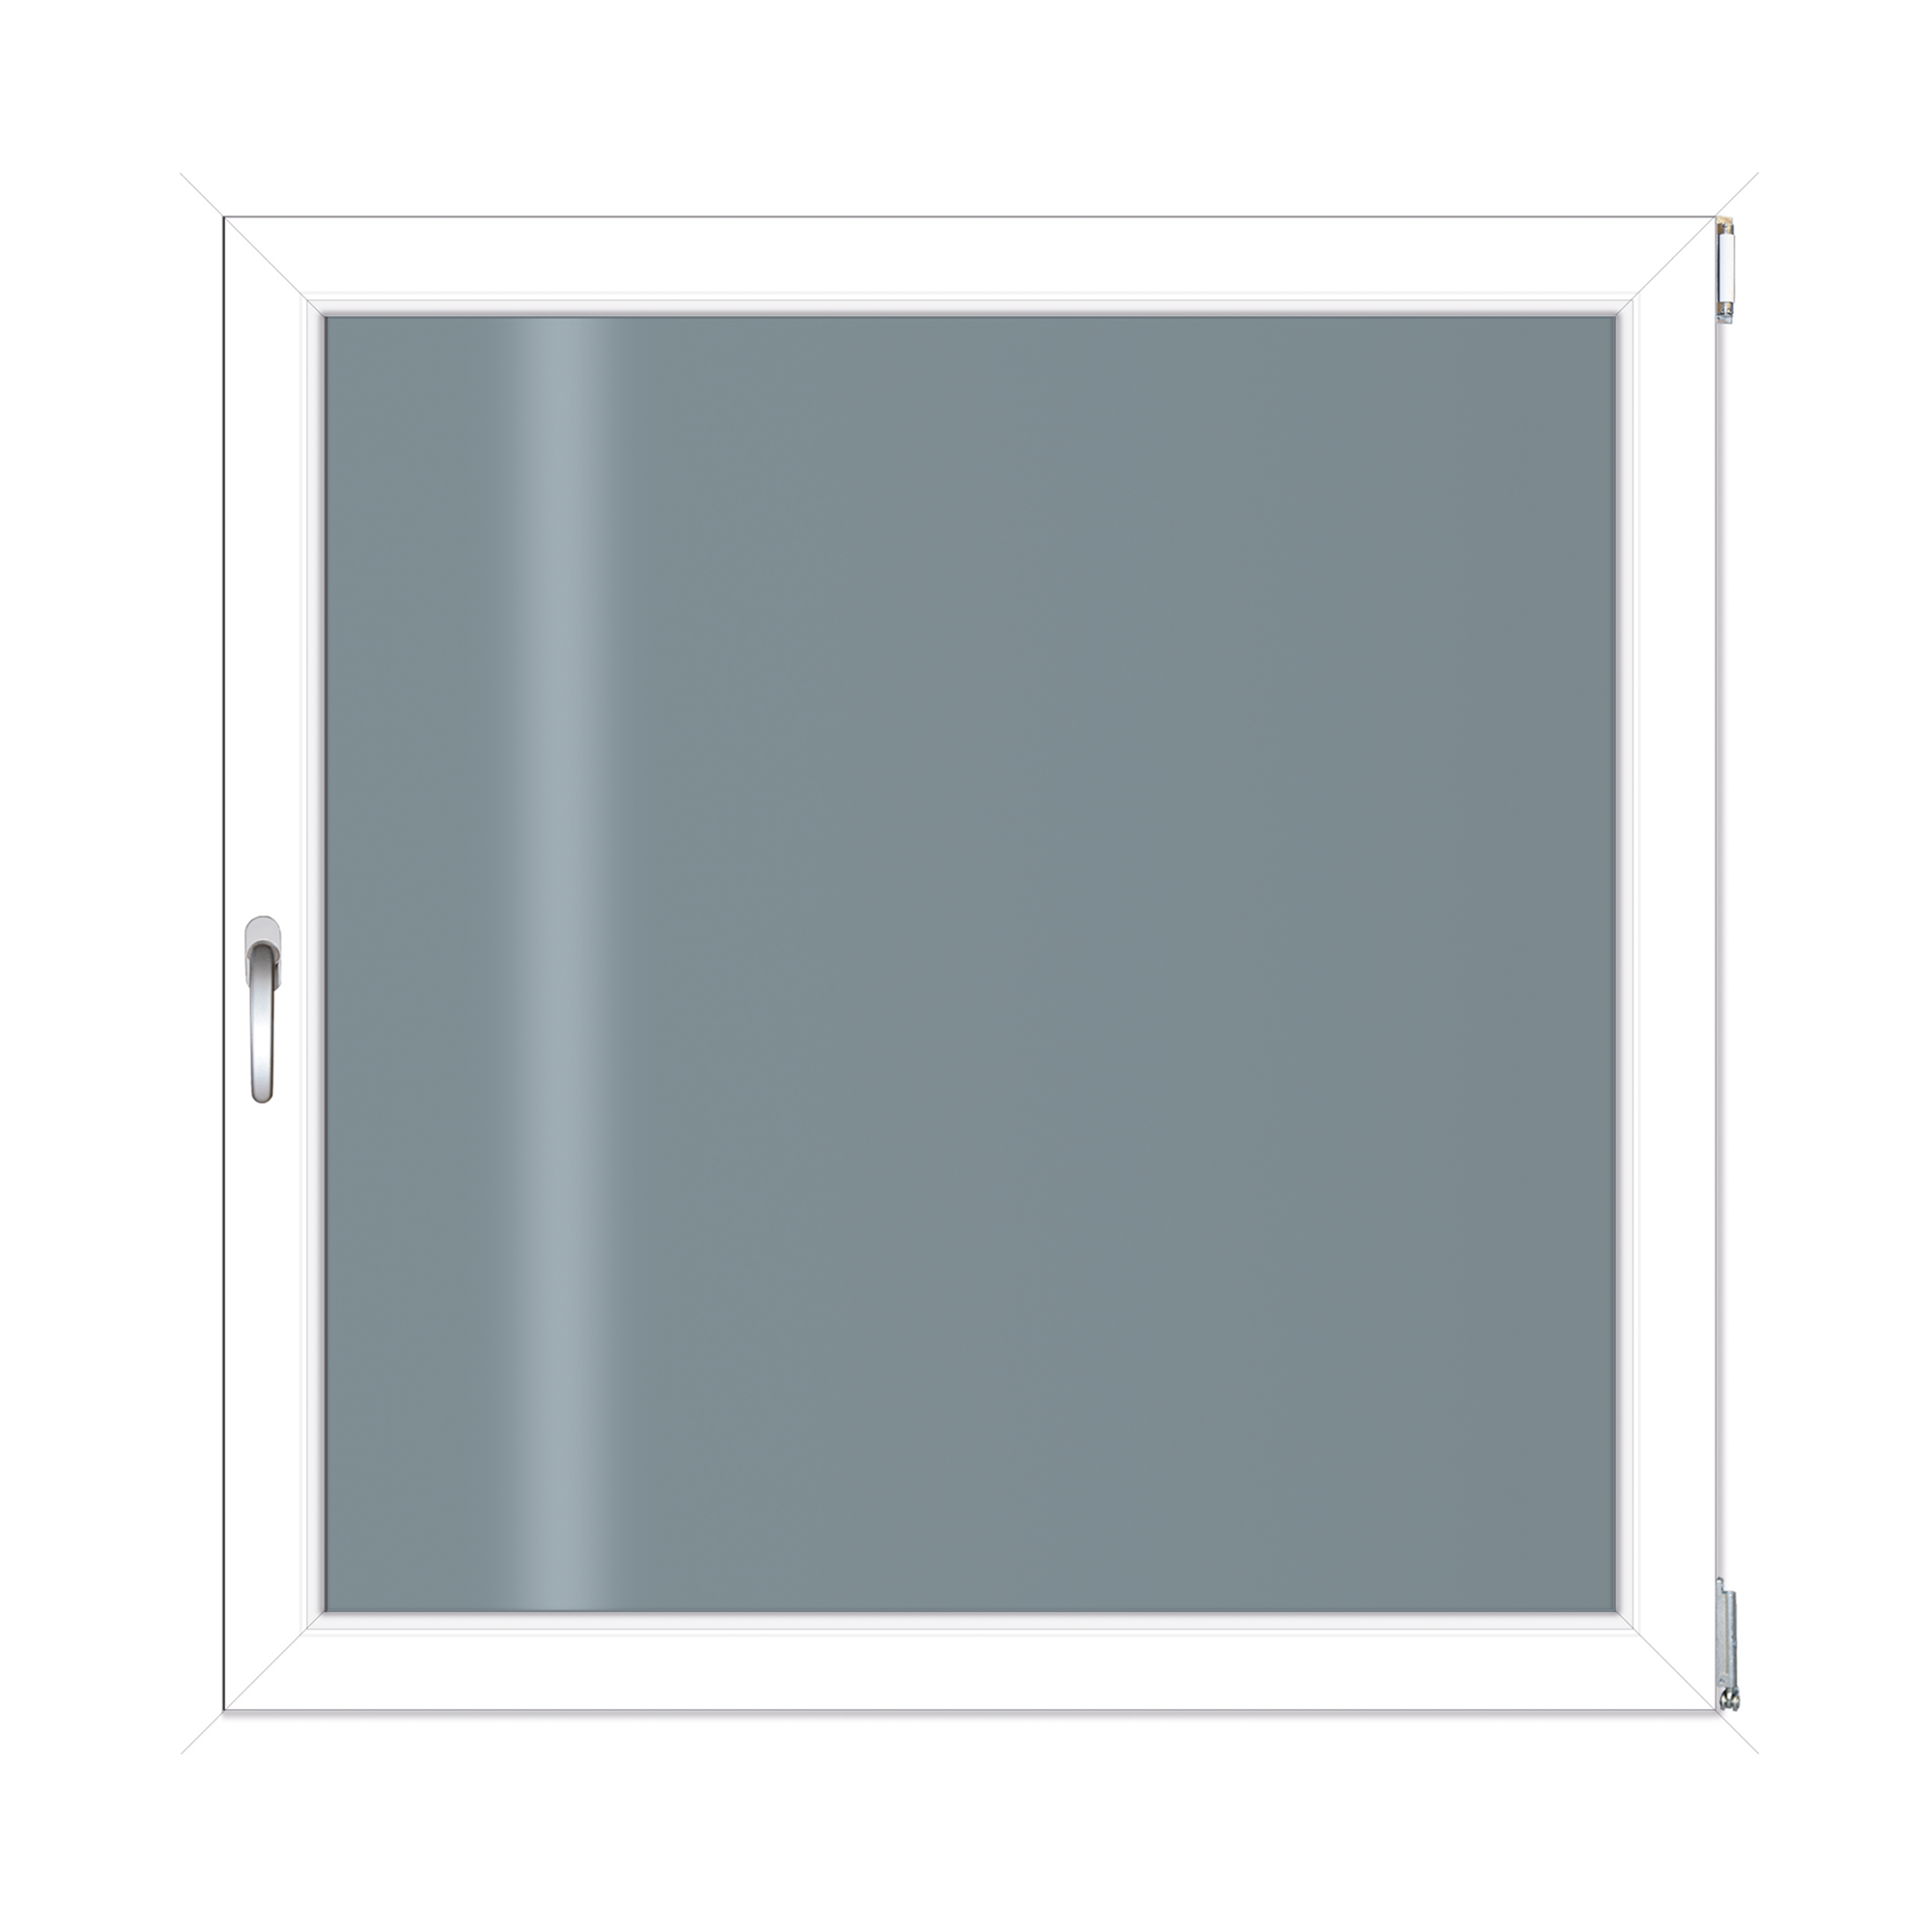 Kunststofffenster 900 x 900 mm weiß DIN rechts + product picture